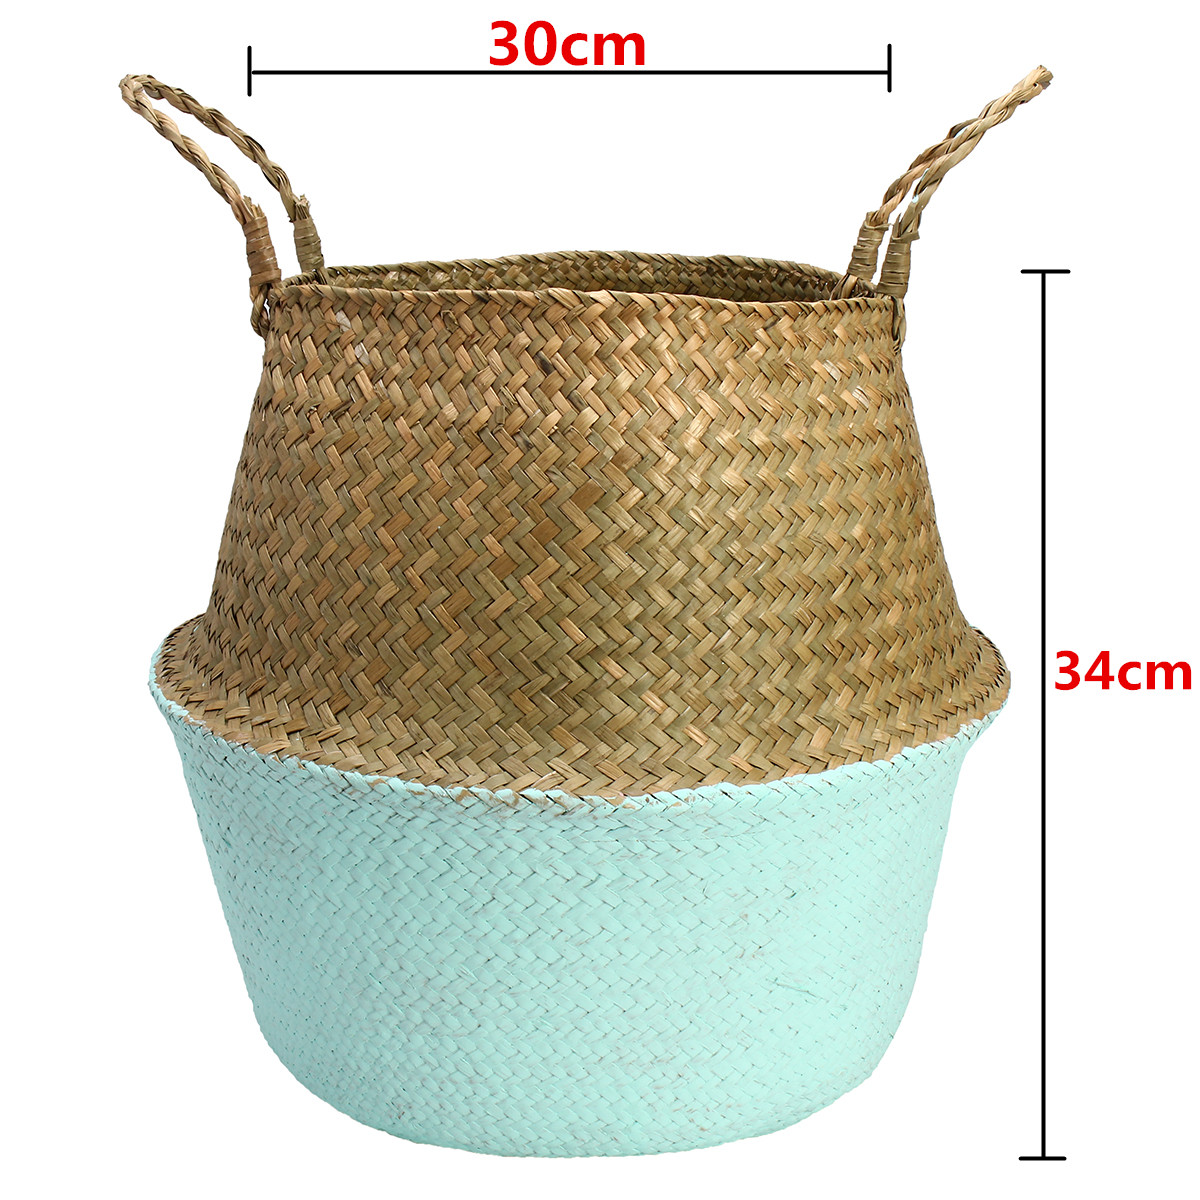 Seagrass-Belly-Storage-Baskets-Shopping-Bag-Box-Organizer-Plant-Pot-Half-Green-1641539-7